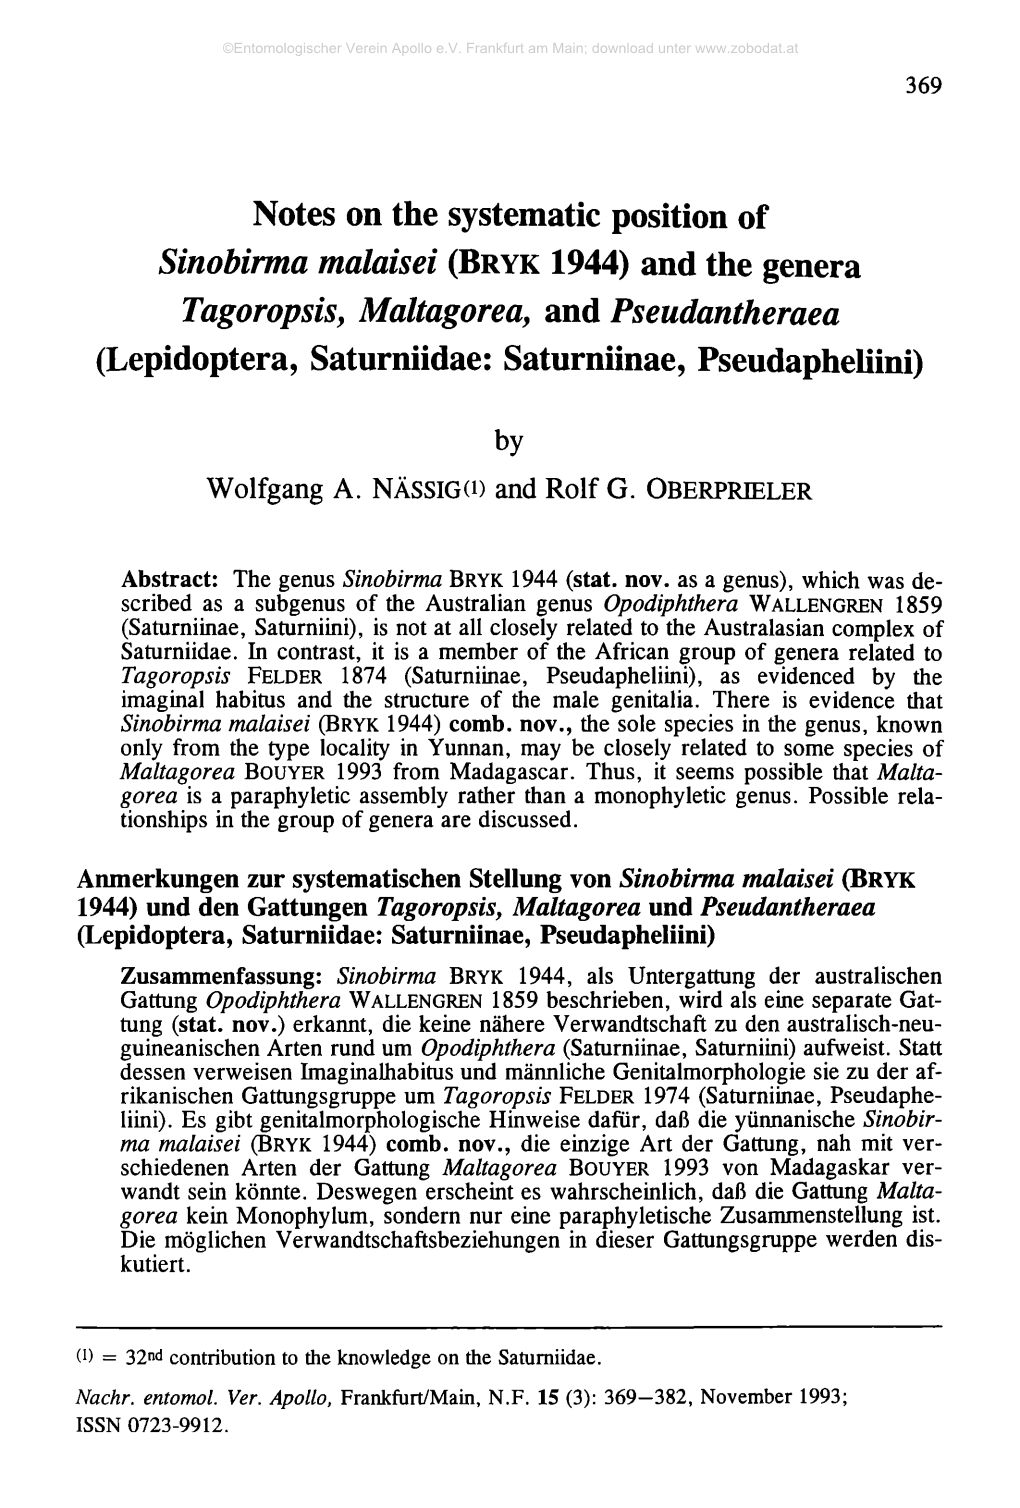 Notes on the Systematic Position of Sinobirma Malaisei